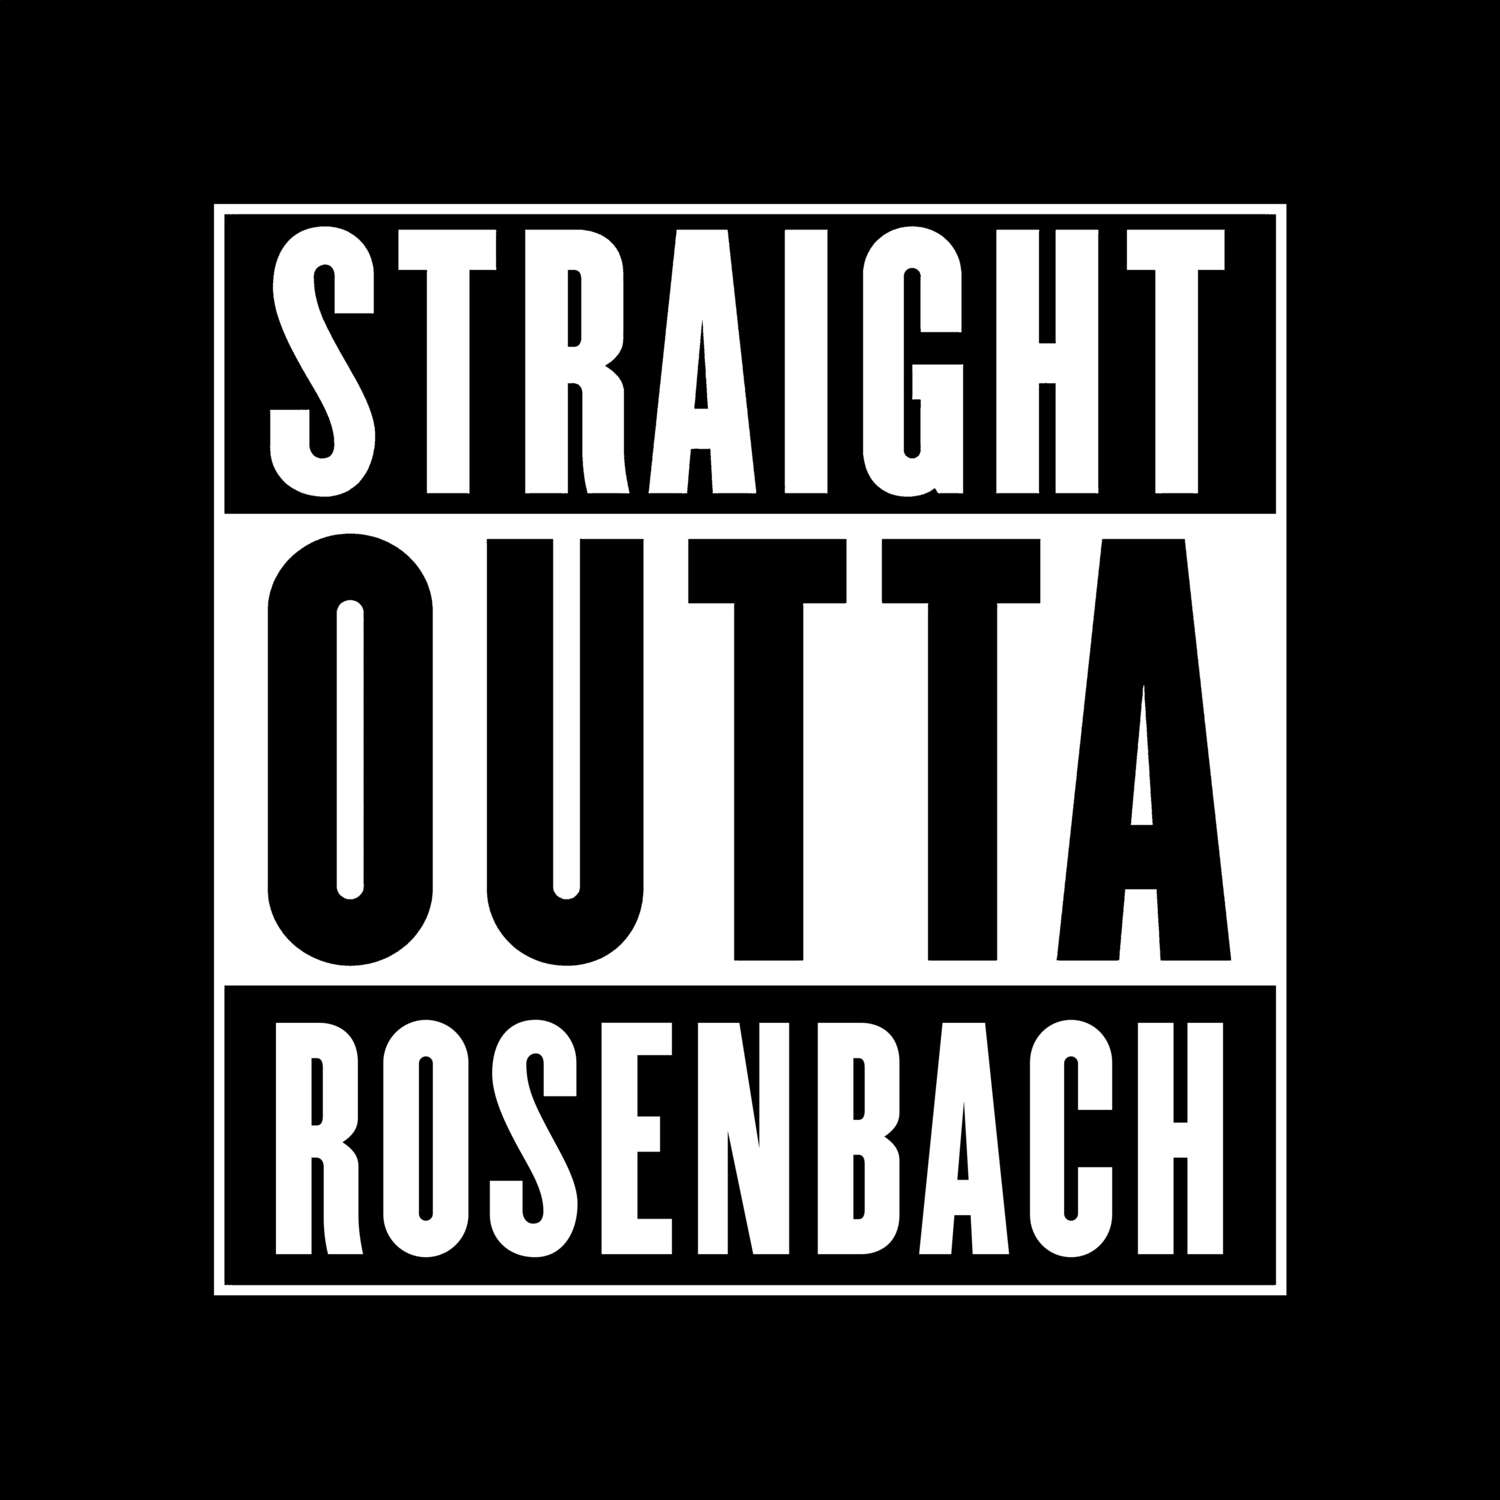 Rosenbach T-Shirt »Straight Outta«